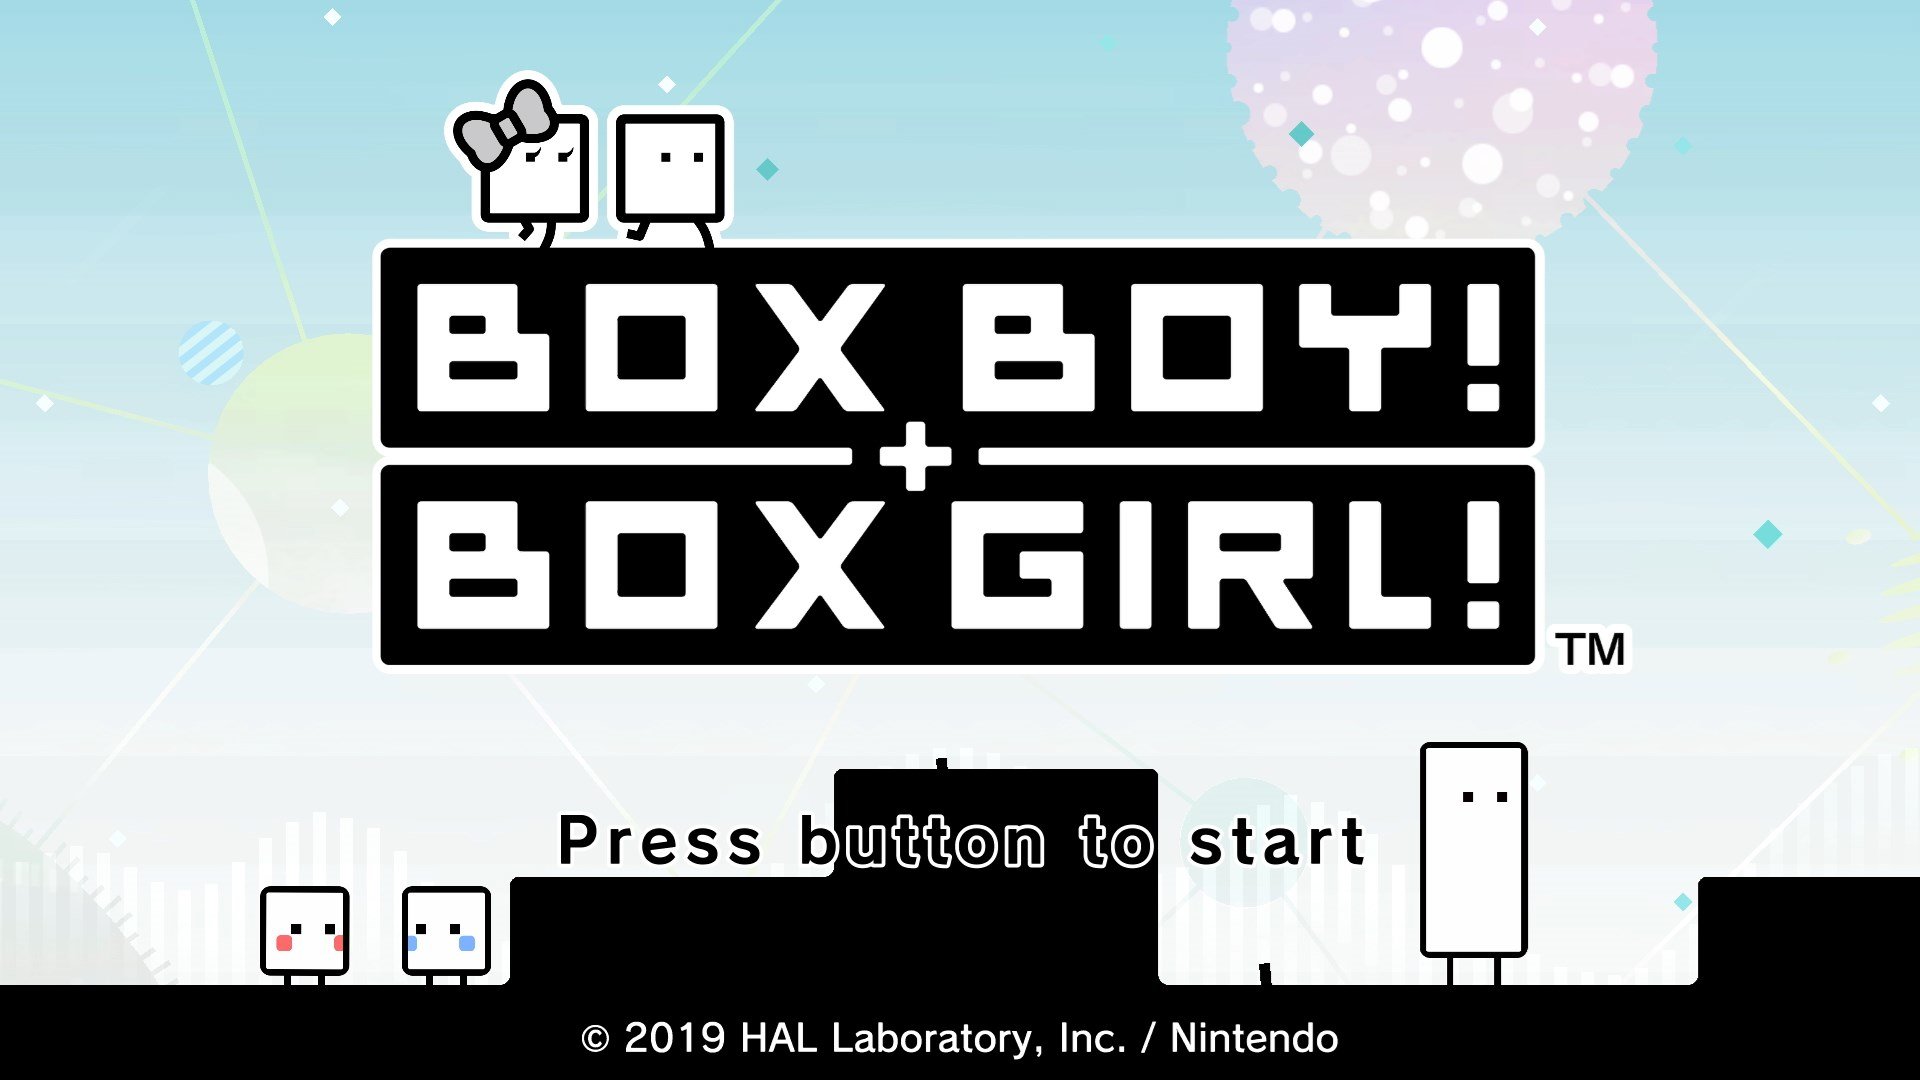 Nintendo Switch Boxboy Labo Vr Kit Show Some Promise